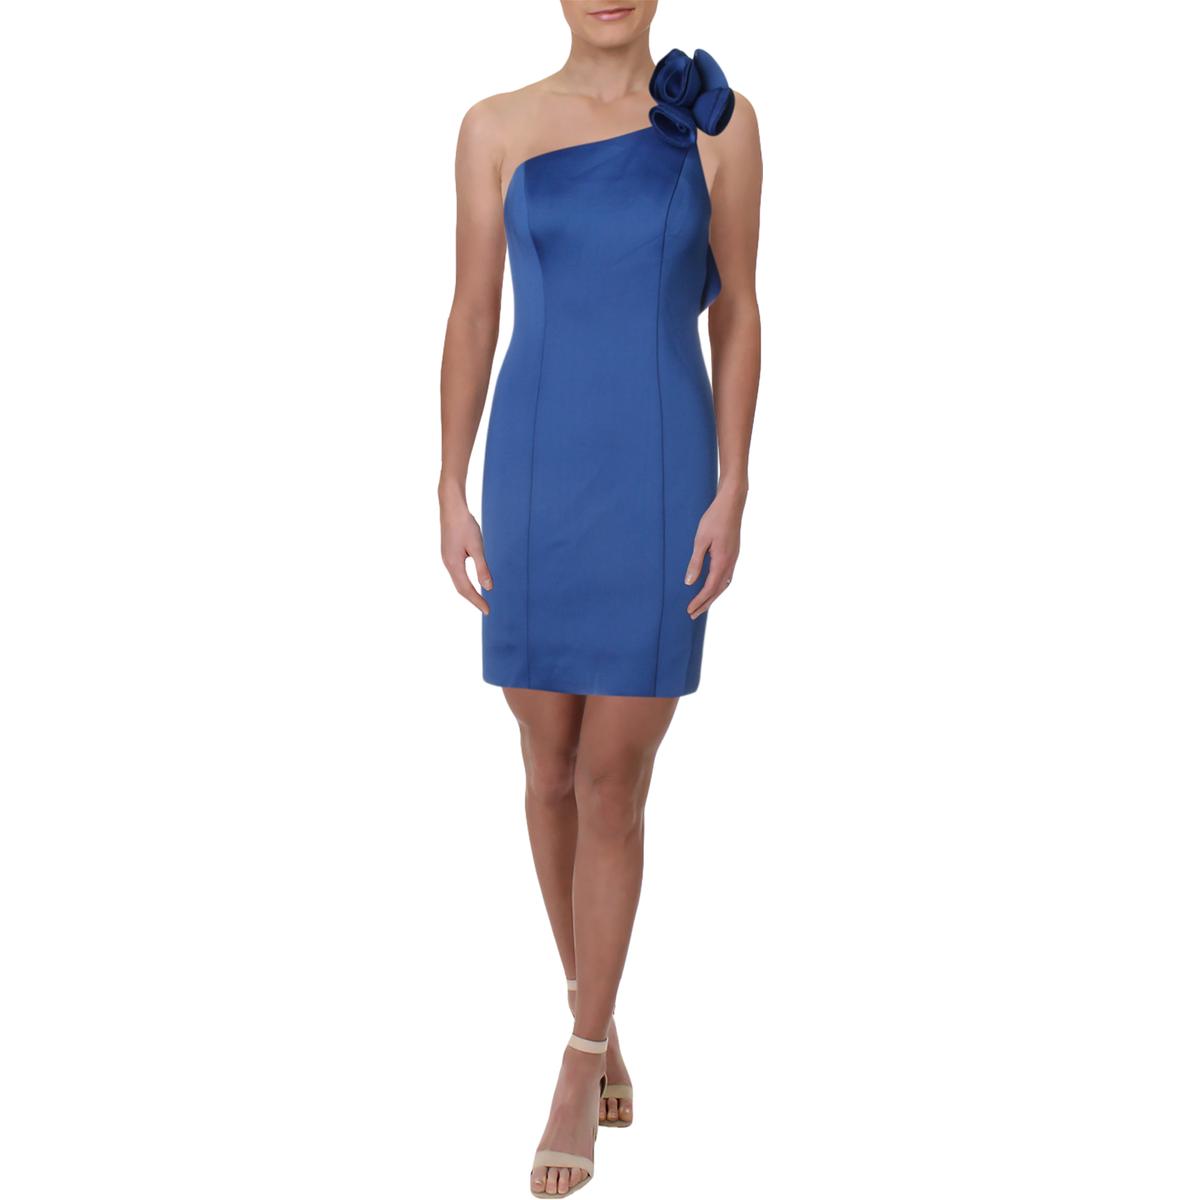 Aqua Womens Blue One Shoulder Scuba Ruffled Party Dress 2 BHFO 4908 | eBay